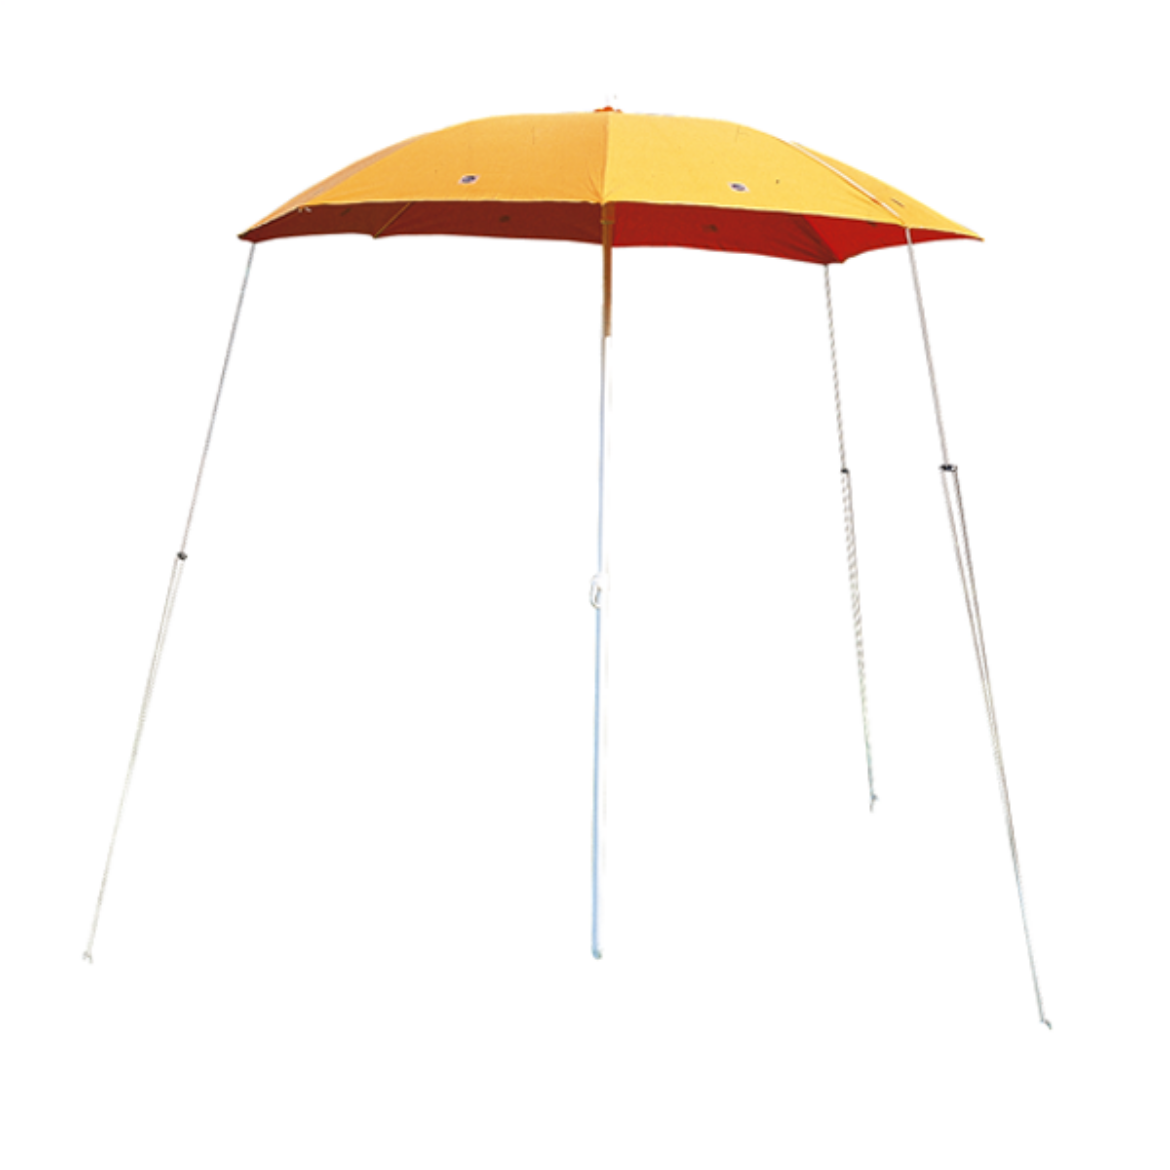 NEDO Alet Şemsiyesi resmi